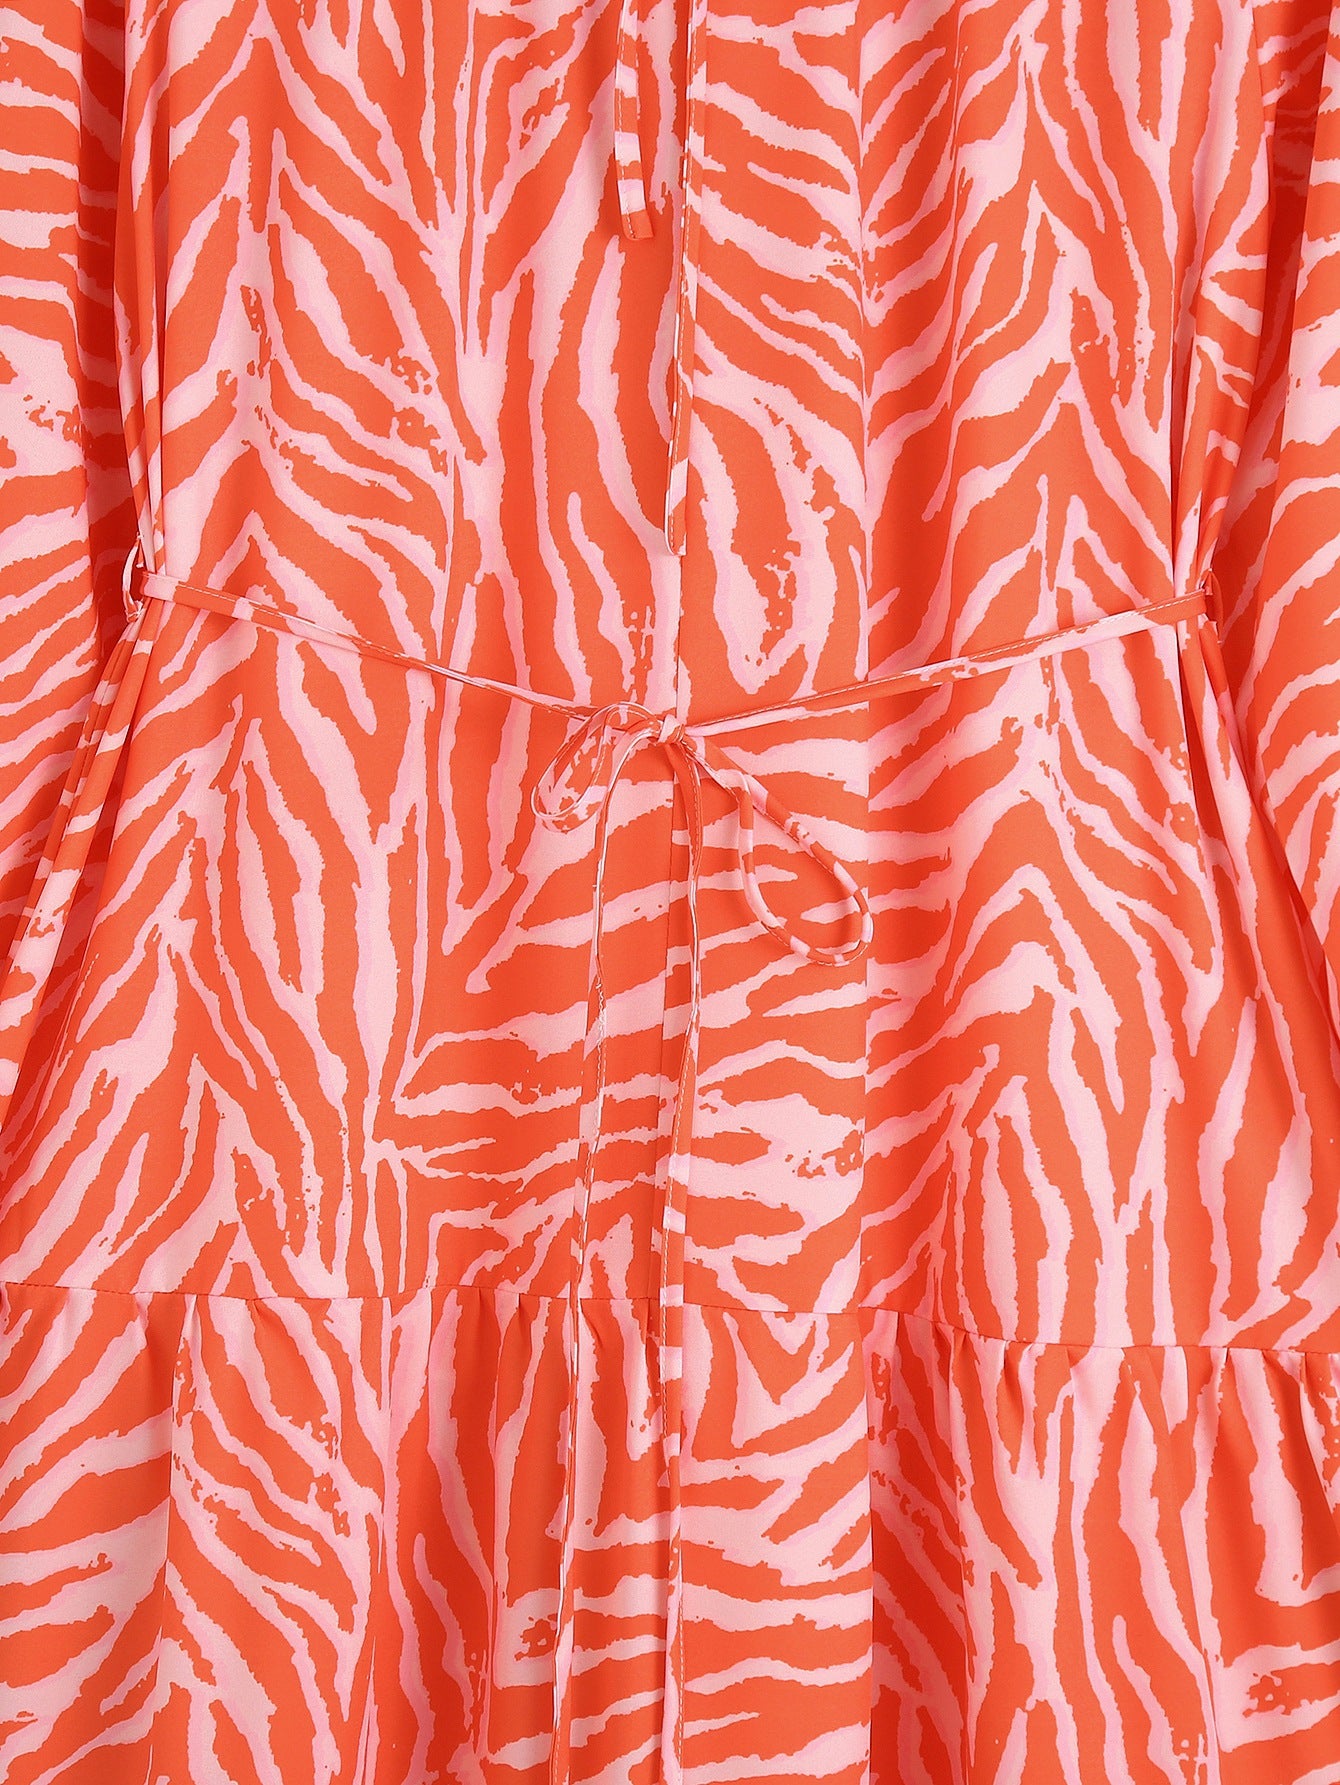 Women Orange Animal Striped Print Summer Dresses